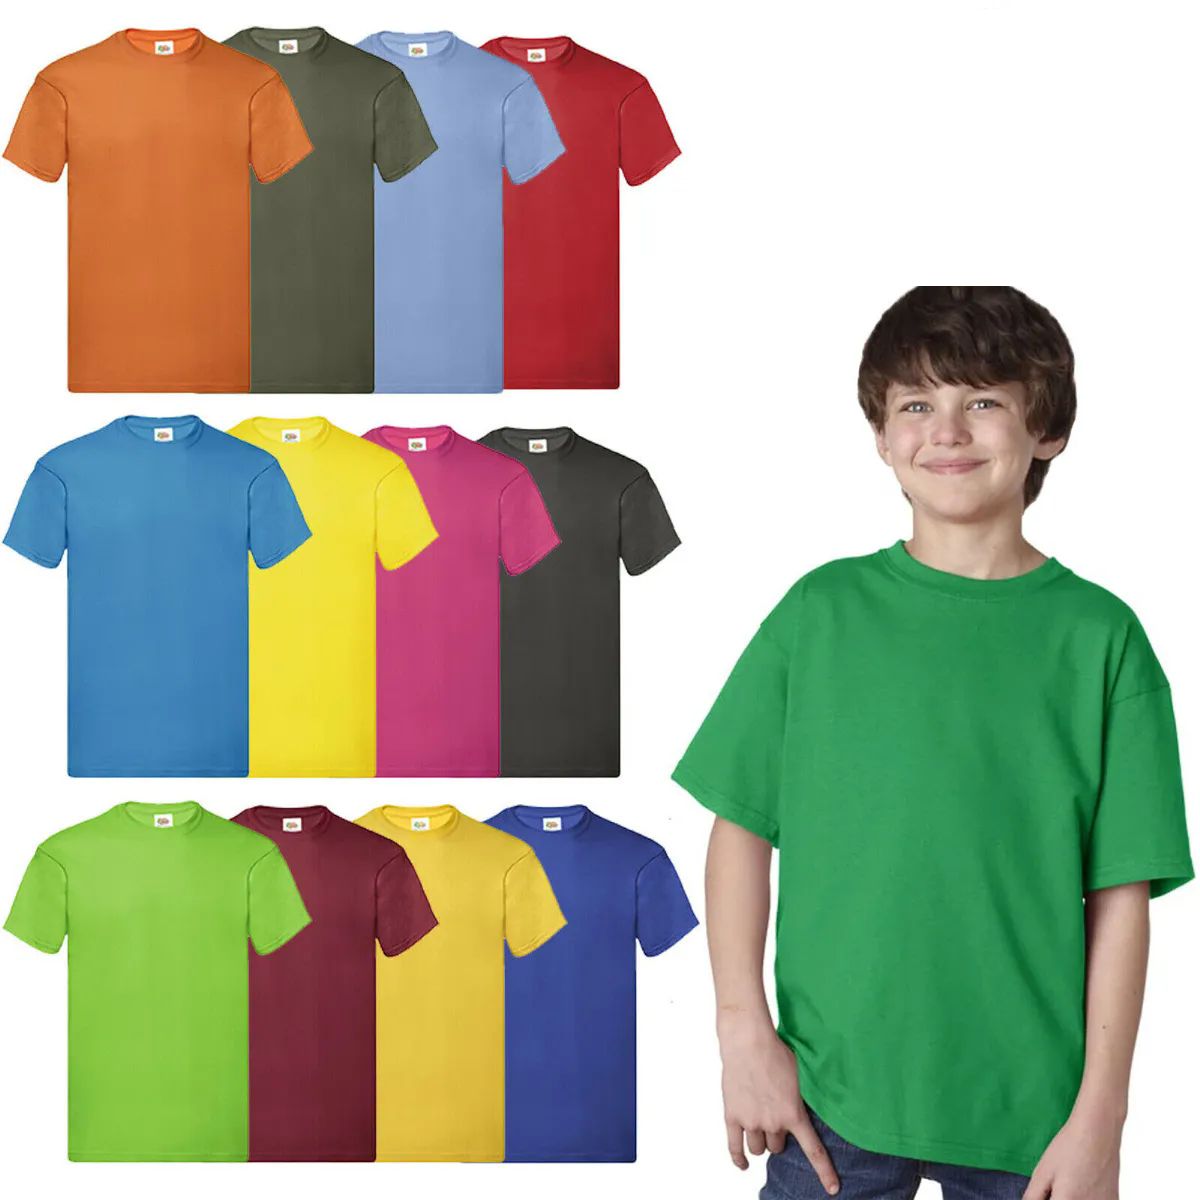 432 Wholesale Billion Hats Kids Youth Cotton Assorted Colors T Shirts Size XL